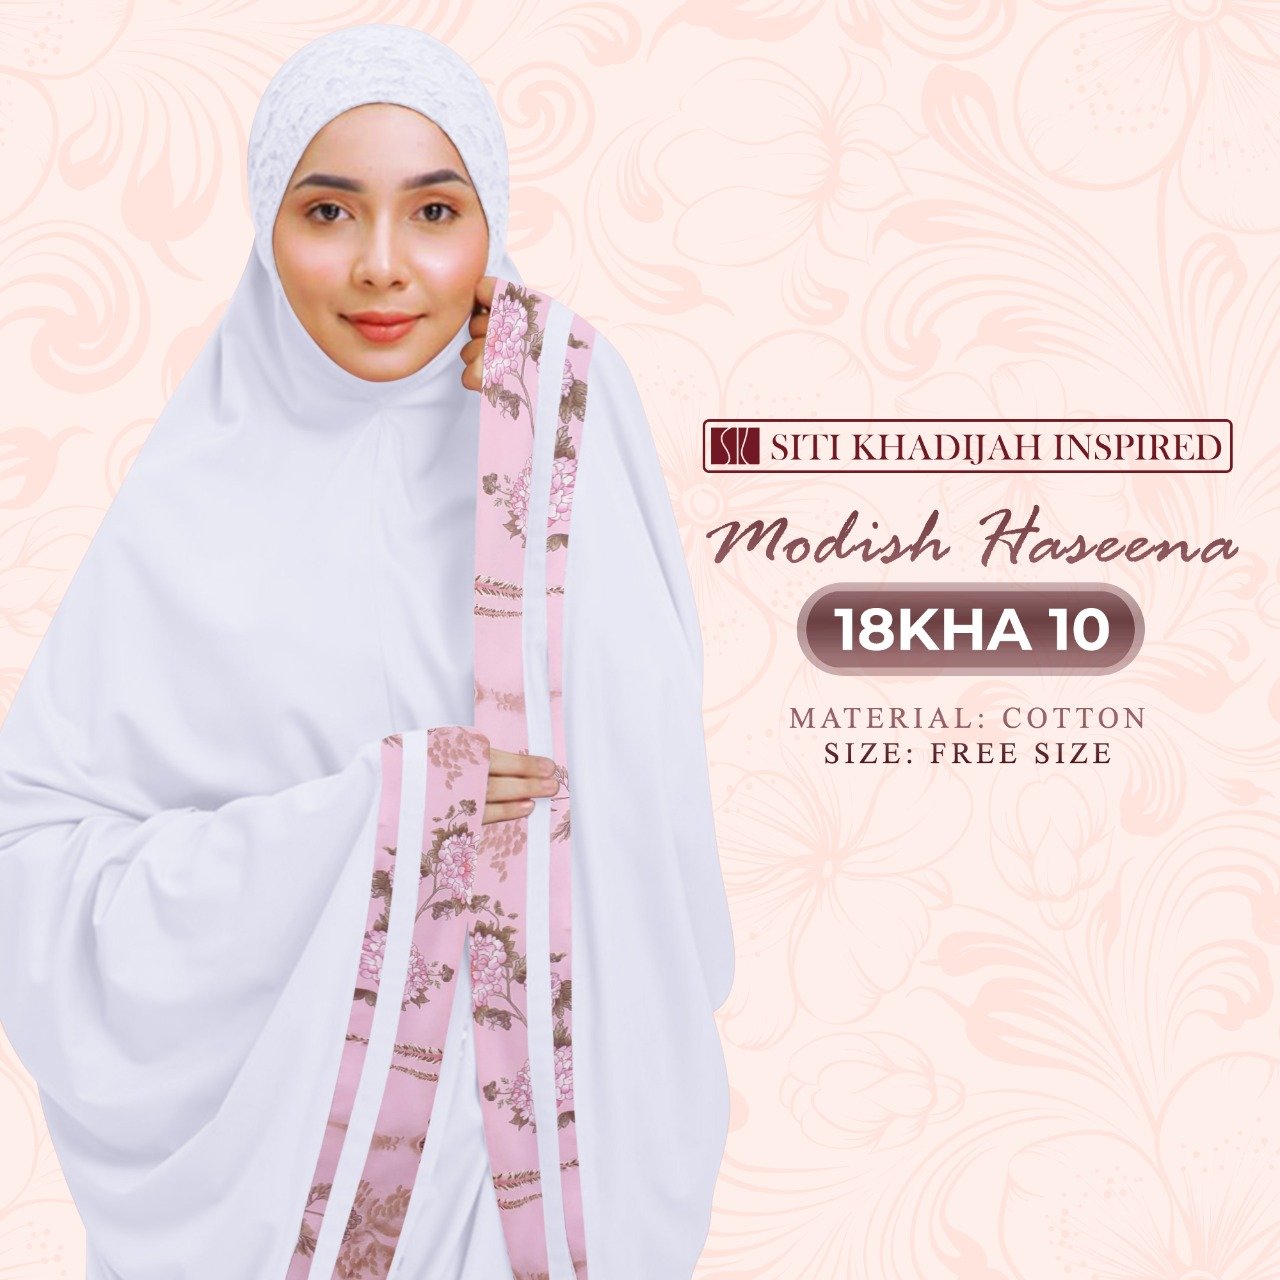 Siti Khadijah Modish Haseena Collection - Free Paper bag RM39